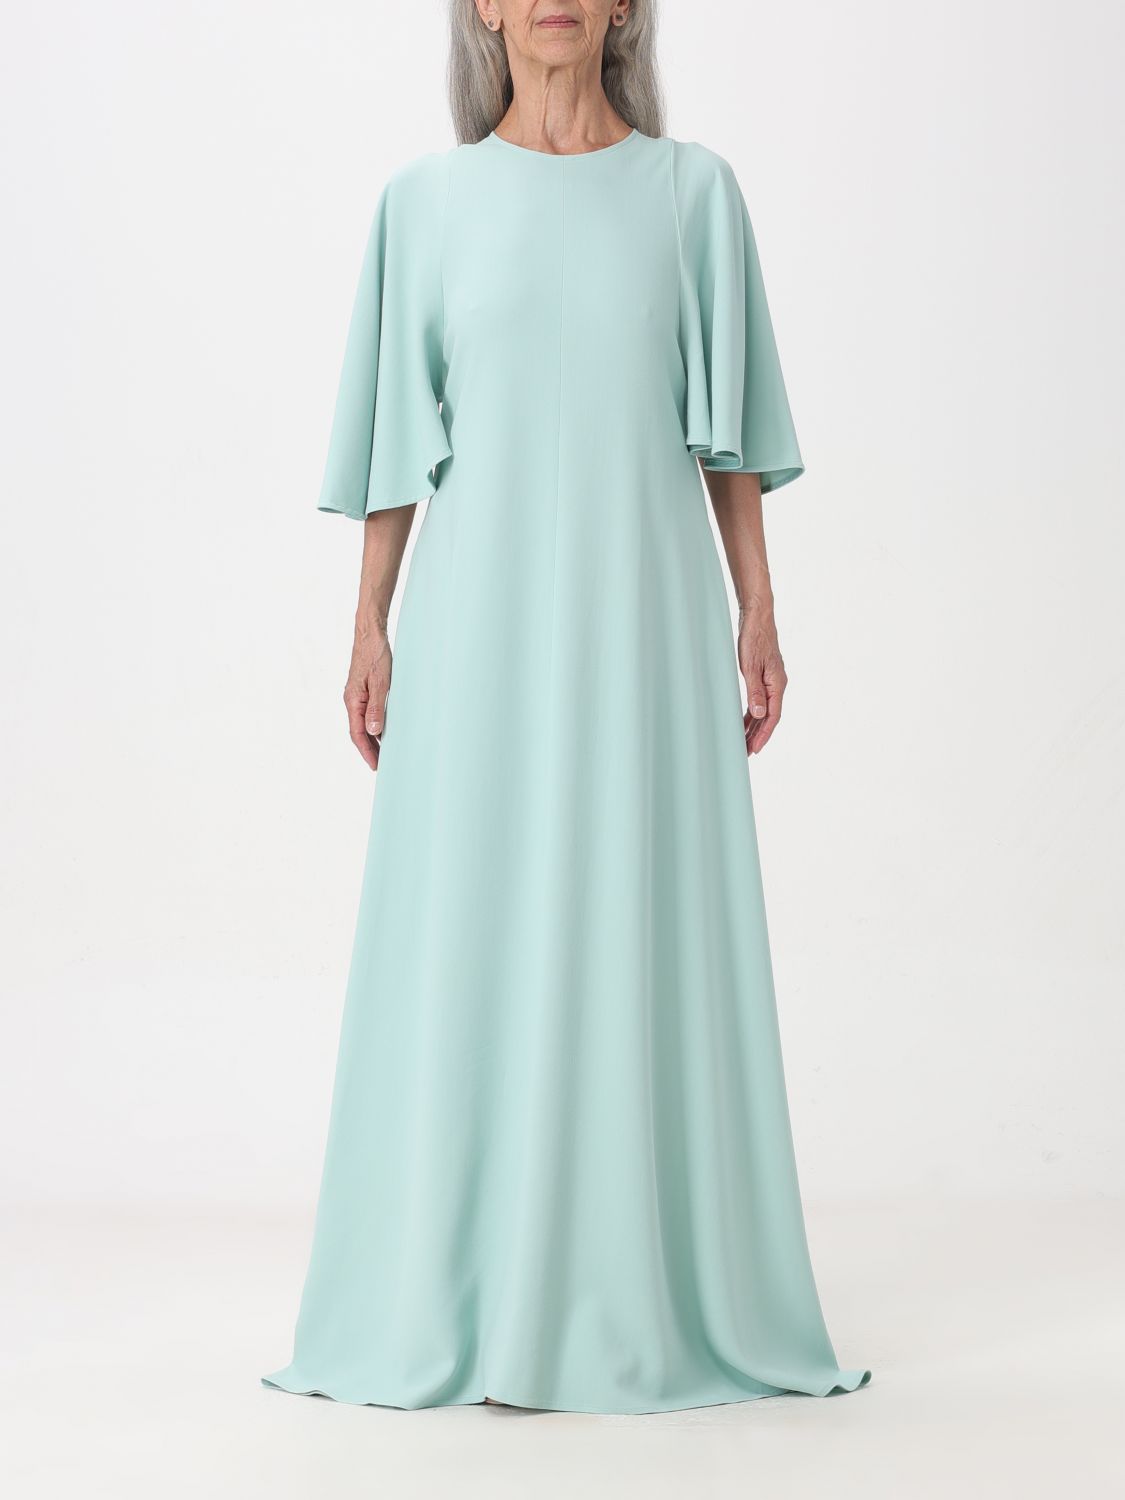 Erika Cavallini Dress  Woman Color Green